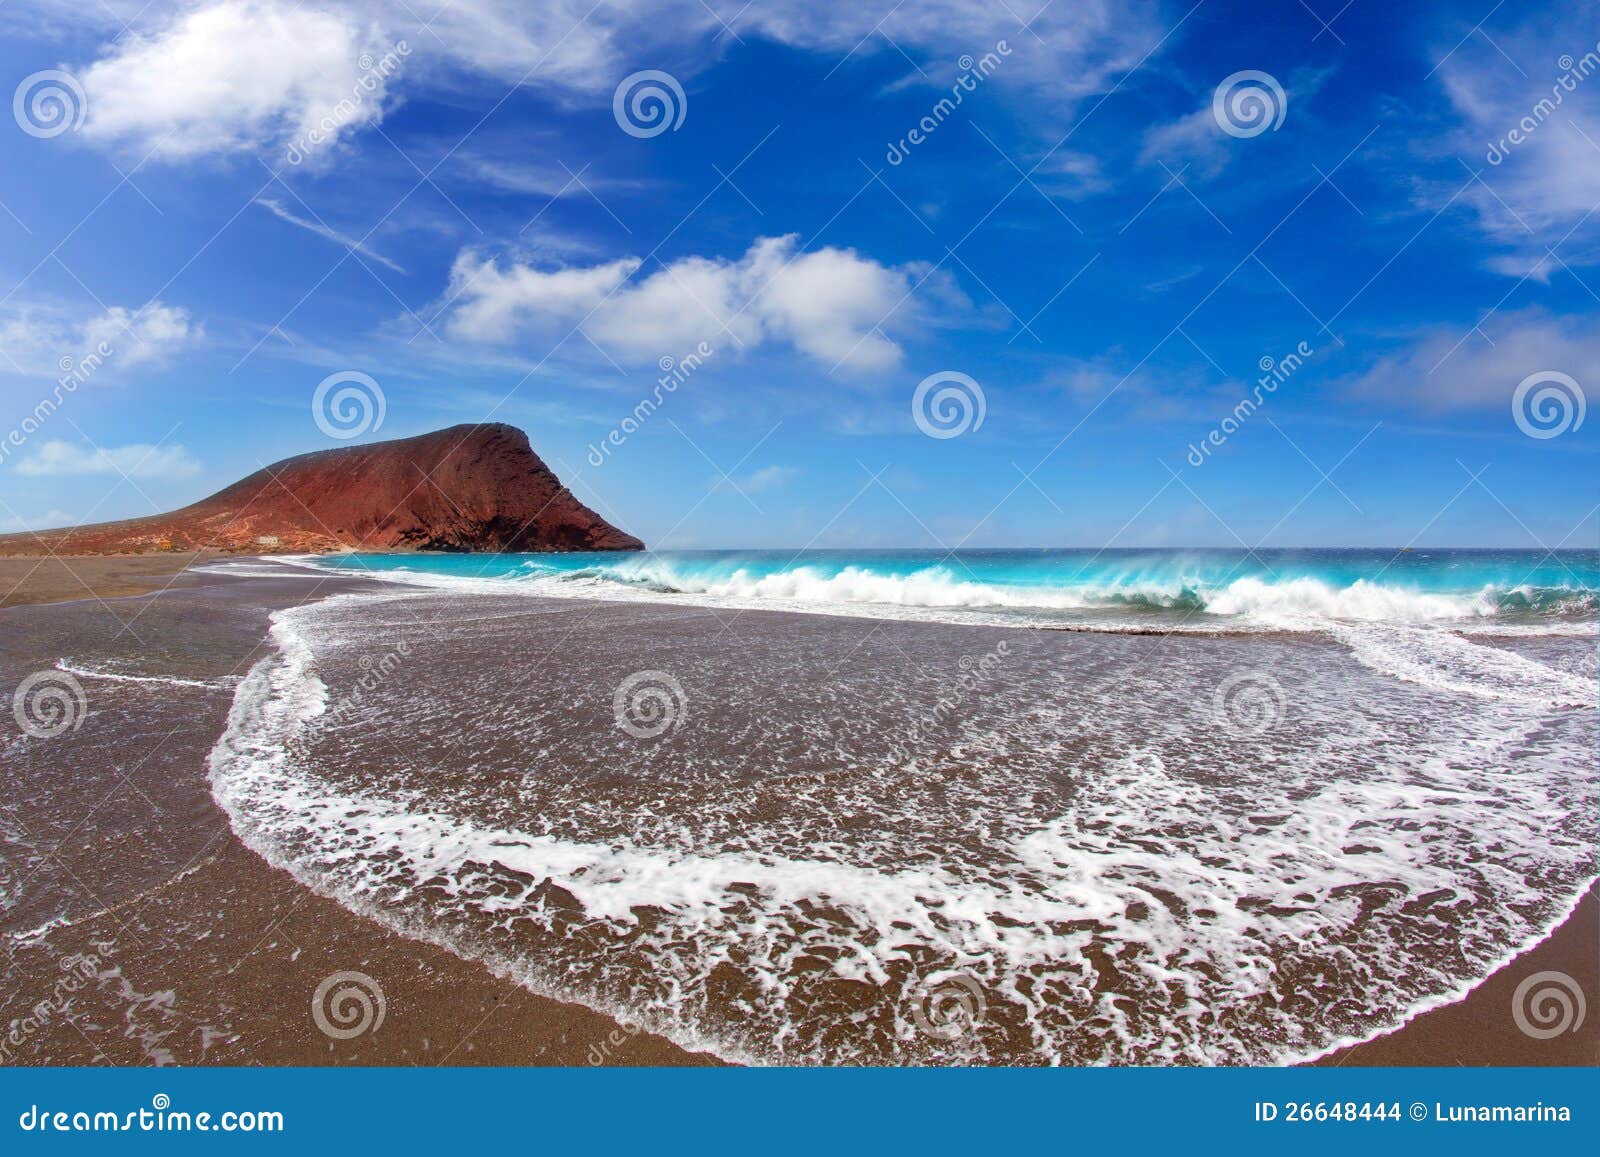 beach playa de la tejita in tenerife